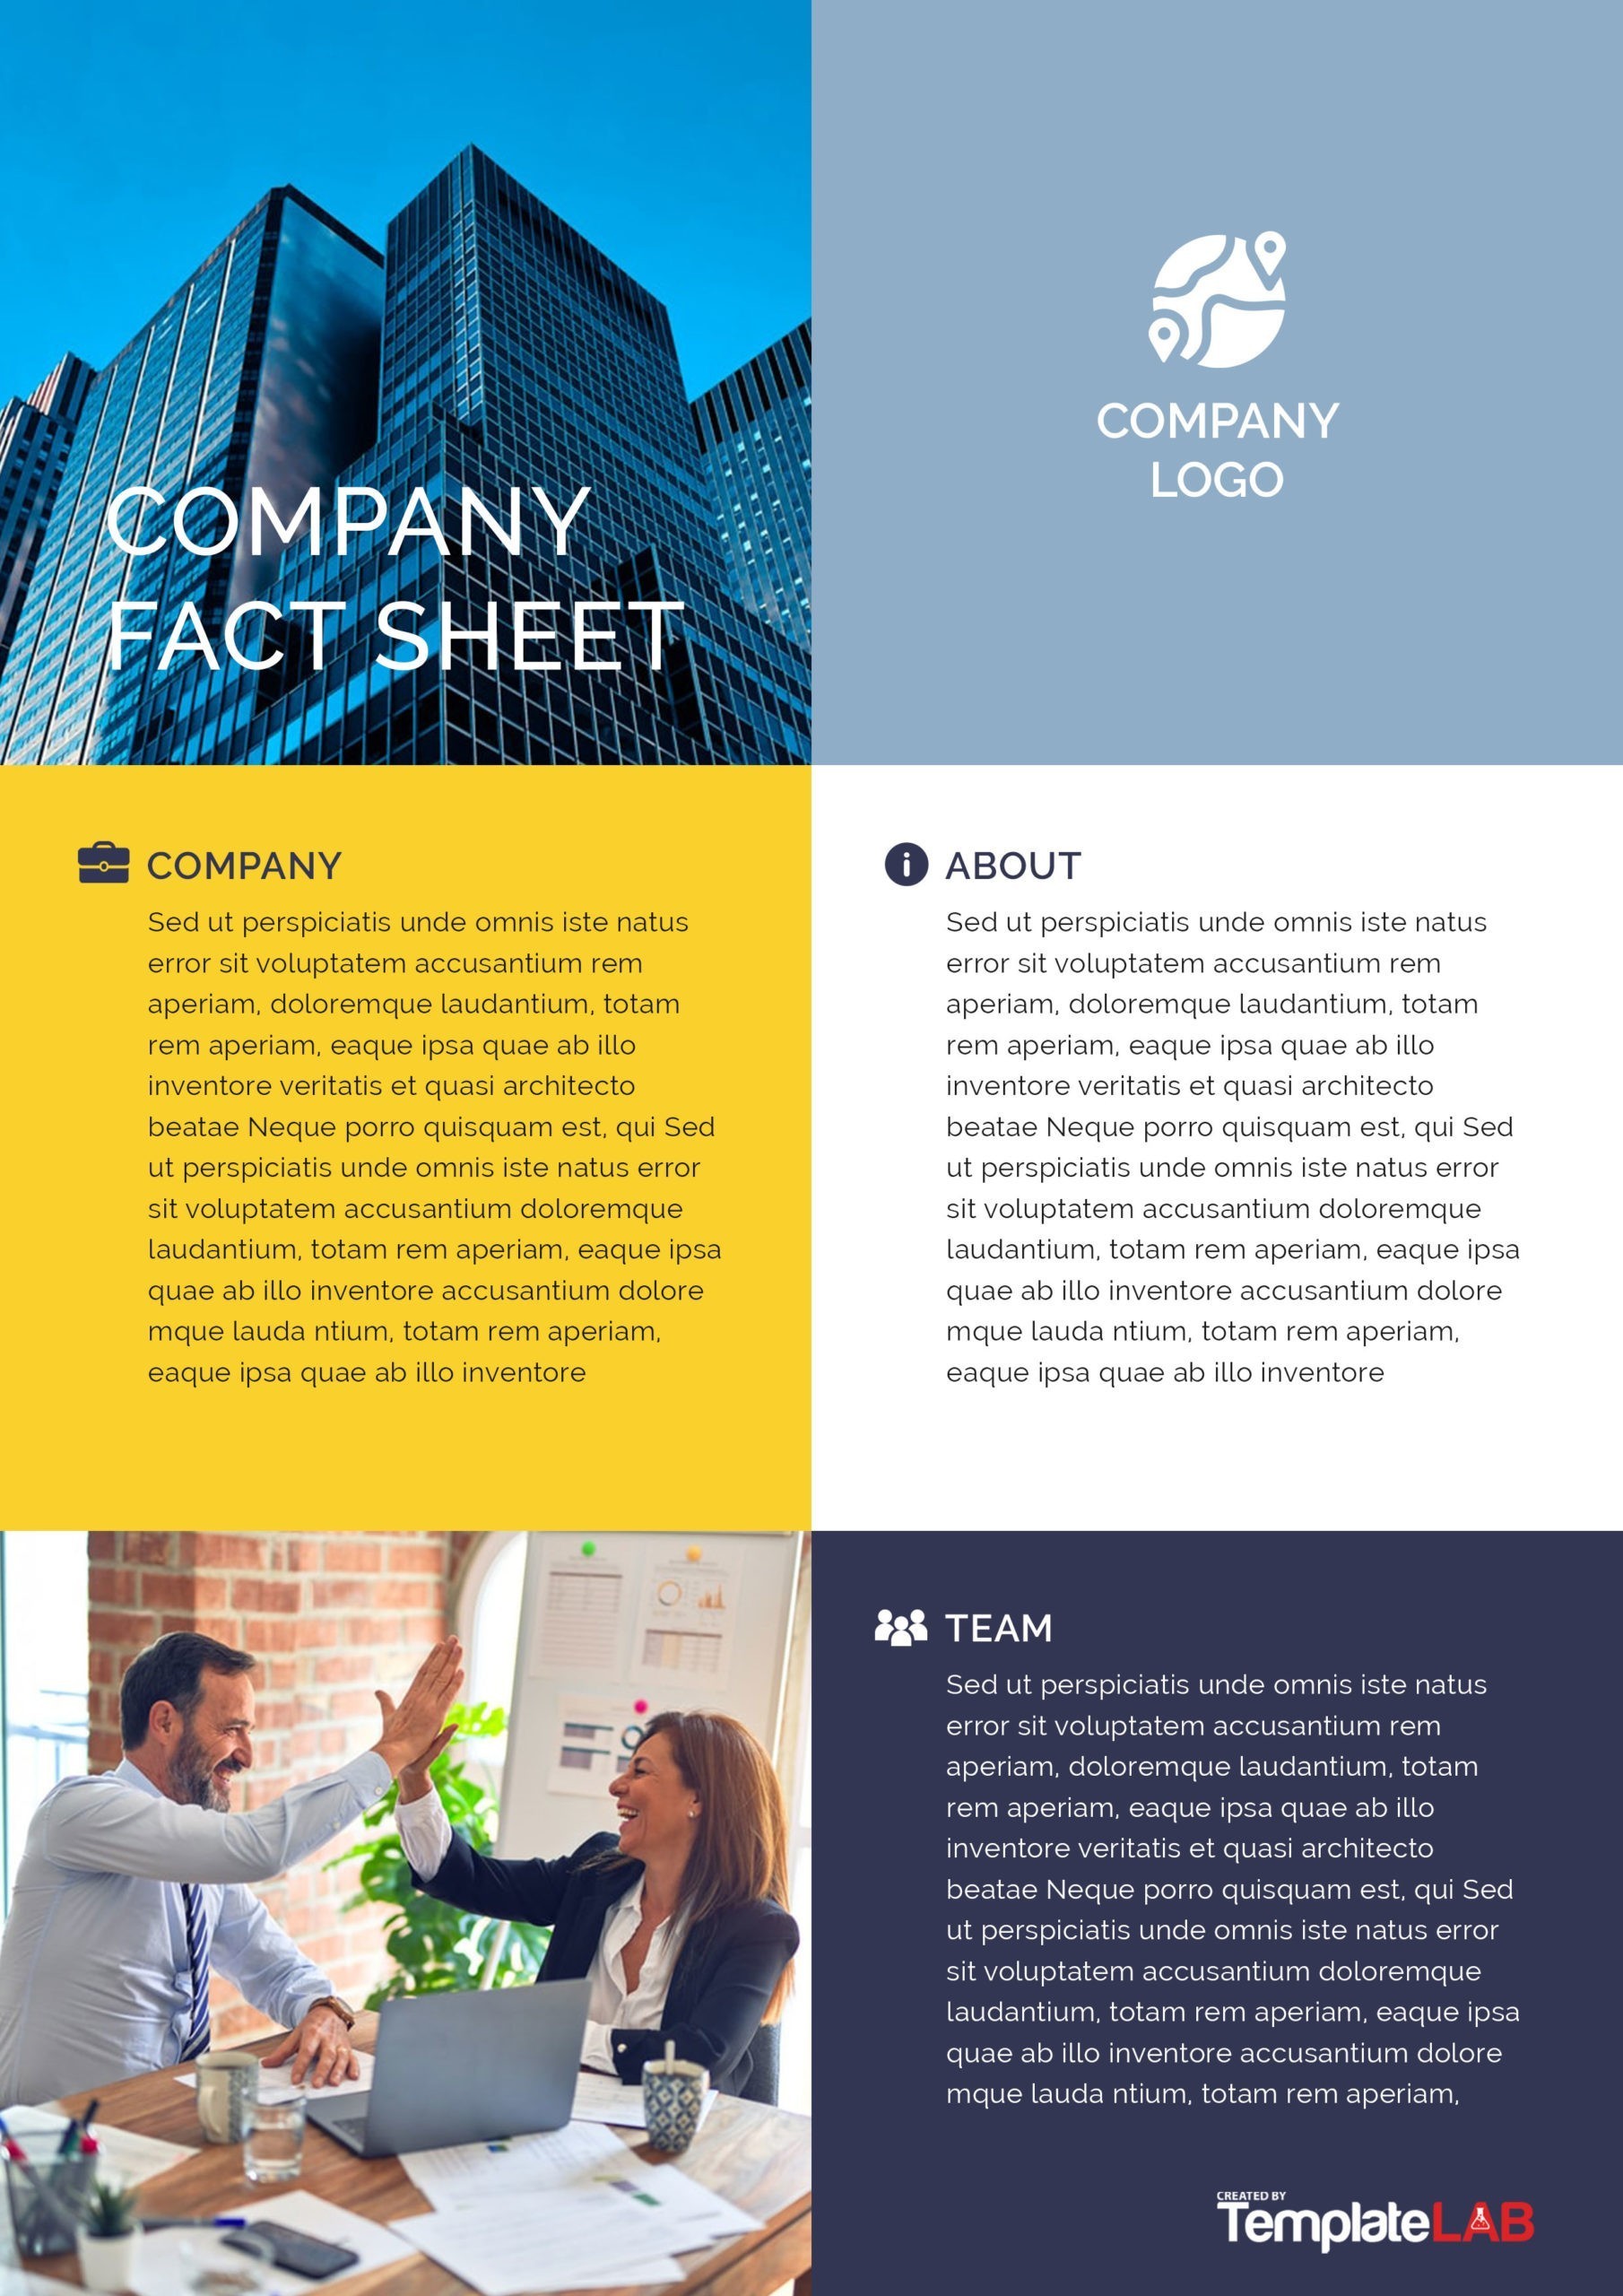 Free Company Fact Sheet